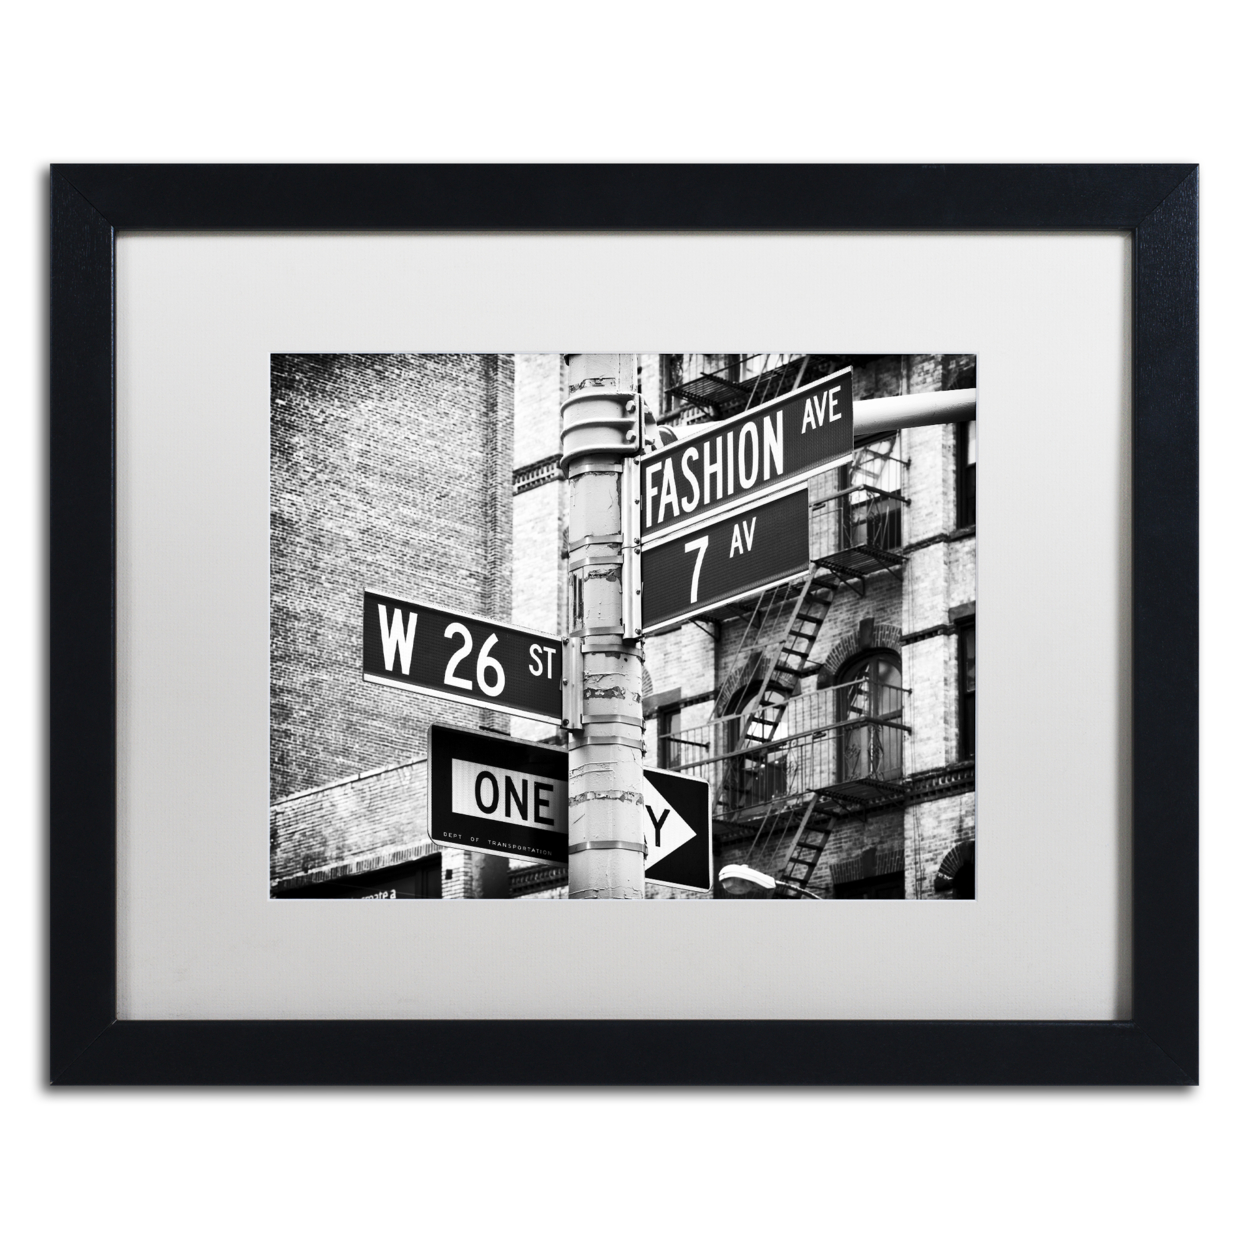 Philippe Hugonnard 'Fashion Avenue NYC' Black Wooden Framed Art 18 X 22 Inches